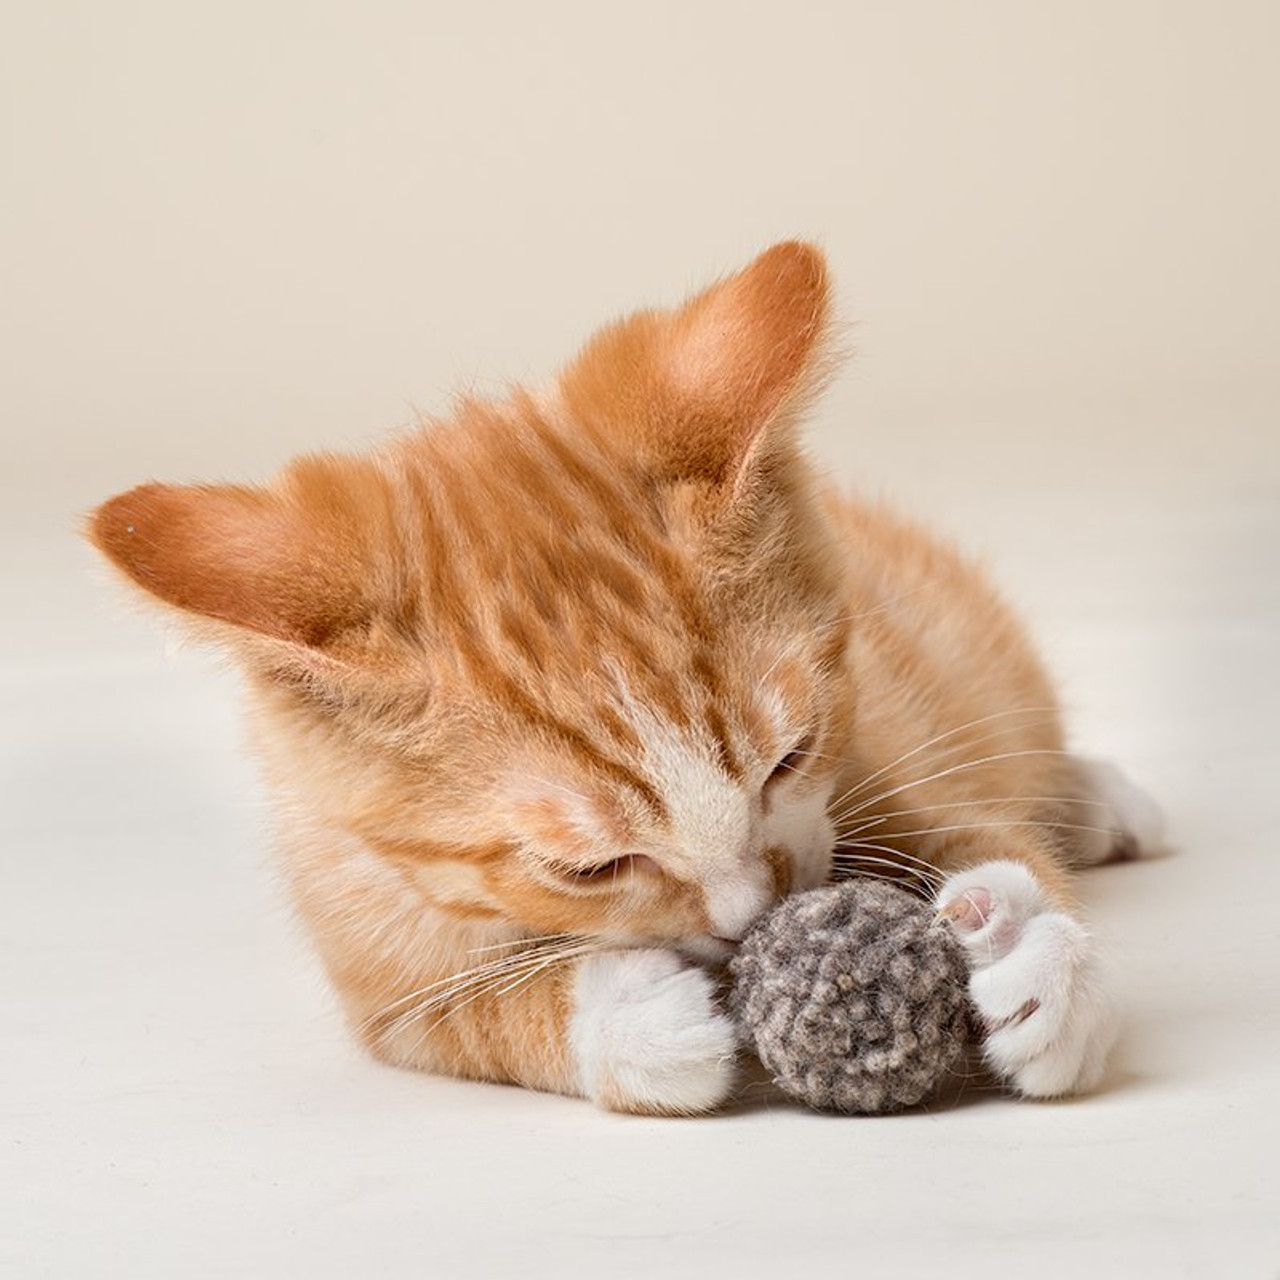 Comfy Pet Supplies ,Set of 6,-100% Wool Felt Ball Toys for Cats